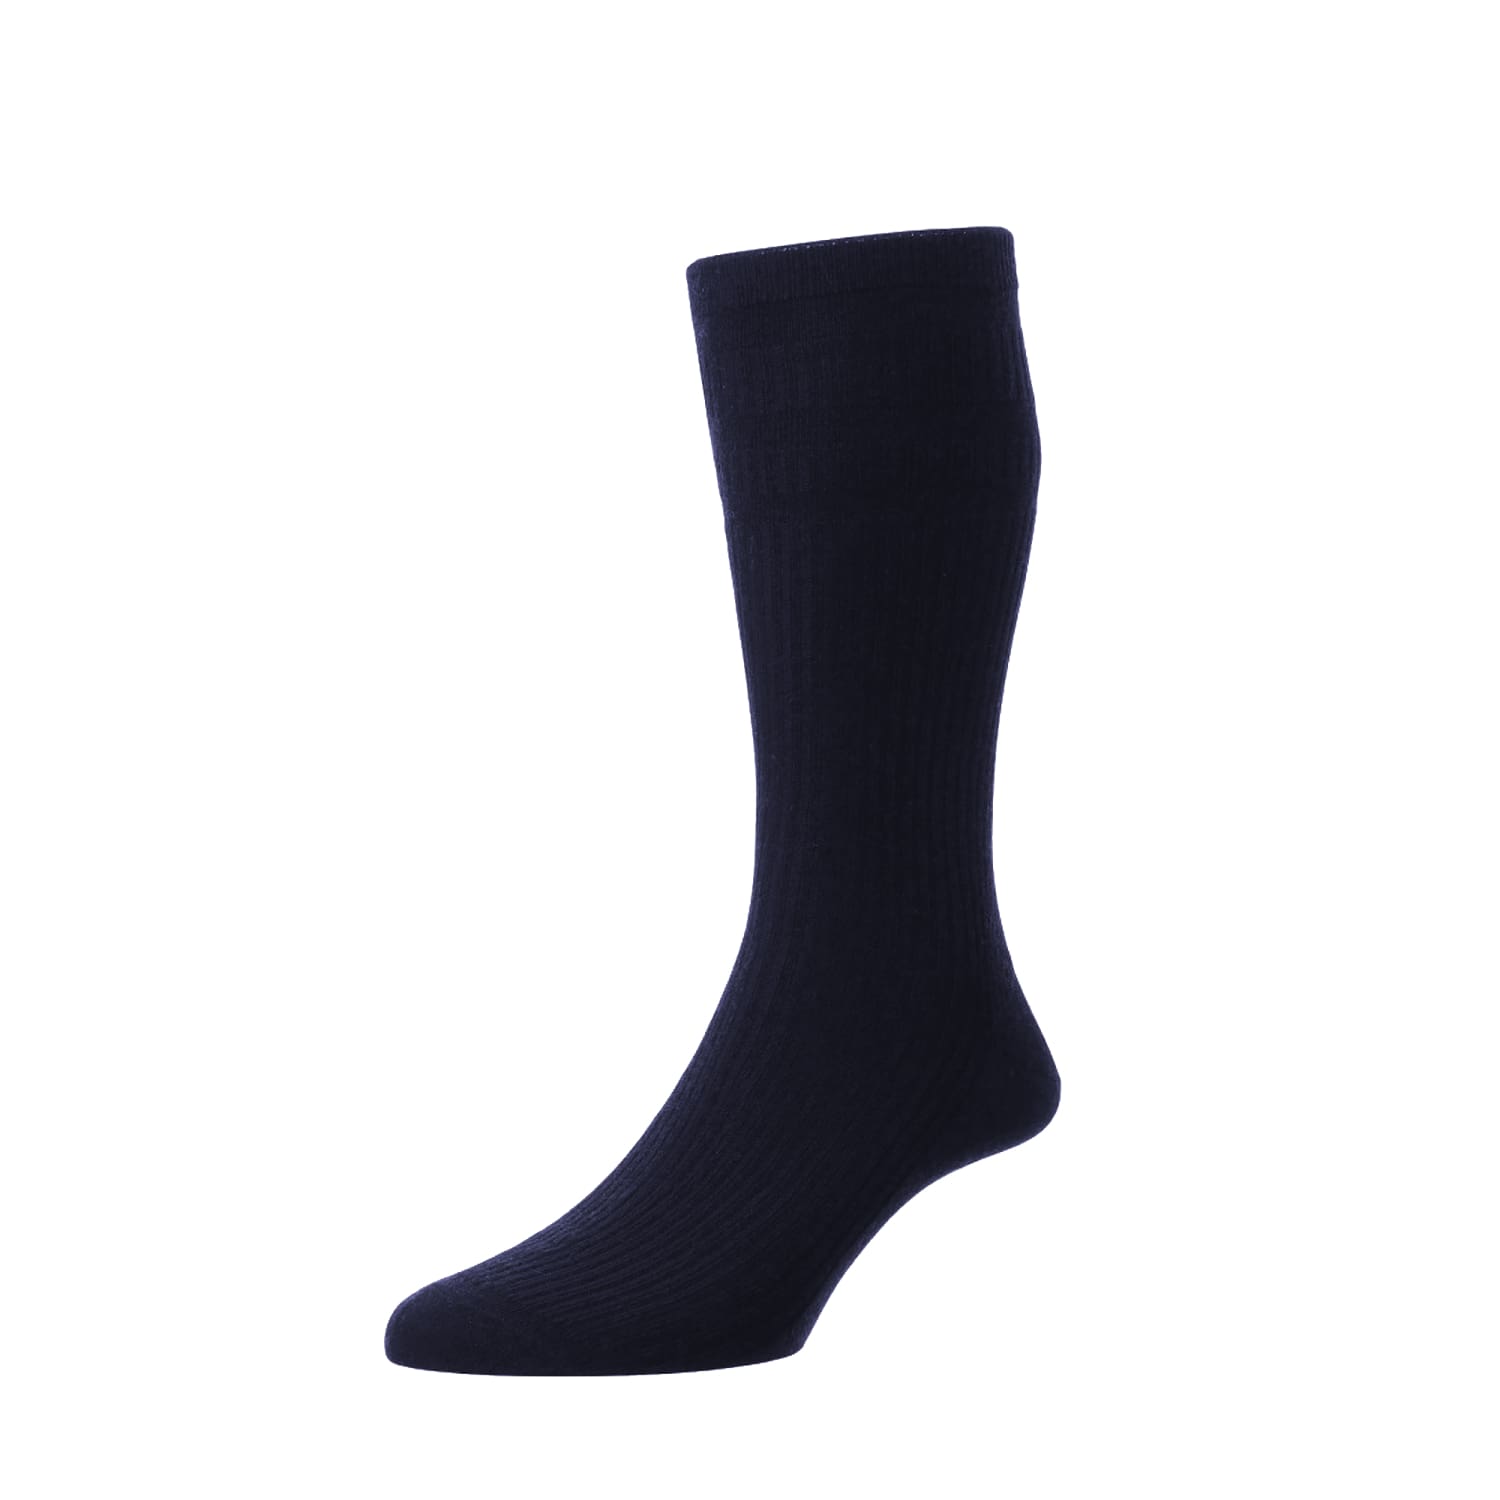 HJ Extra Wide Softop Socks - HJ191H - Cotton - Navy 1